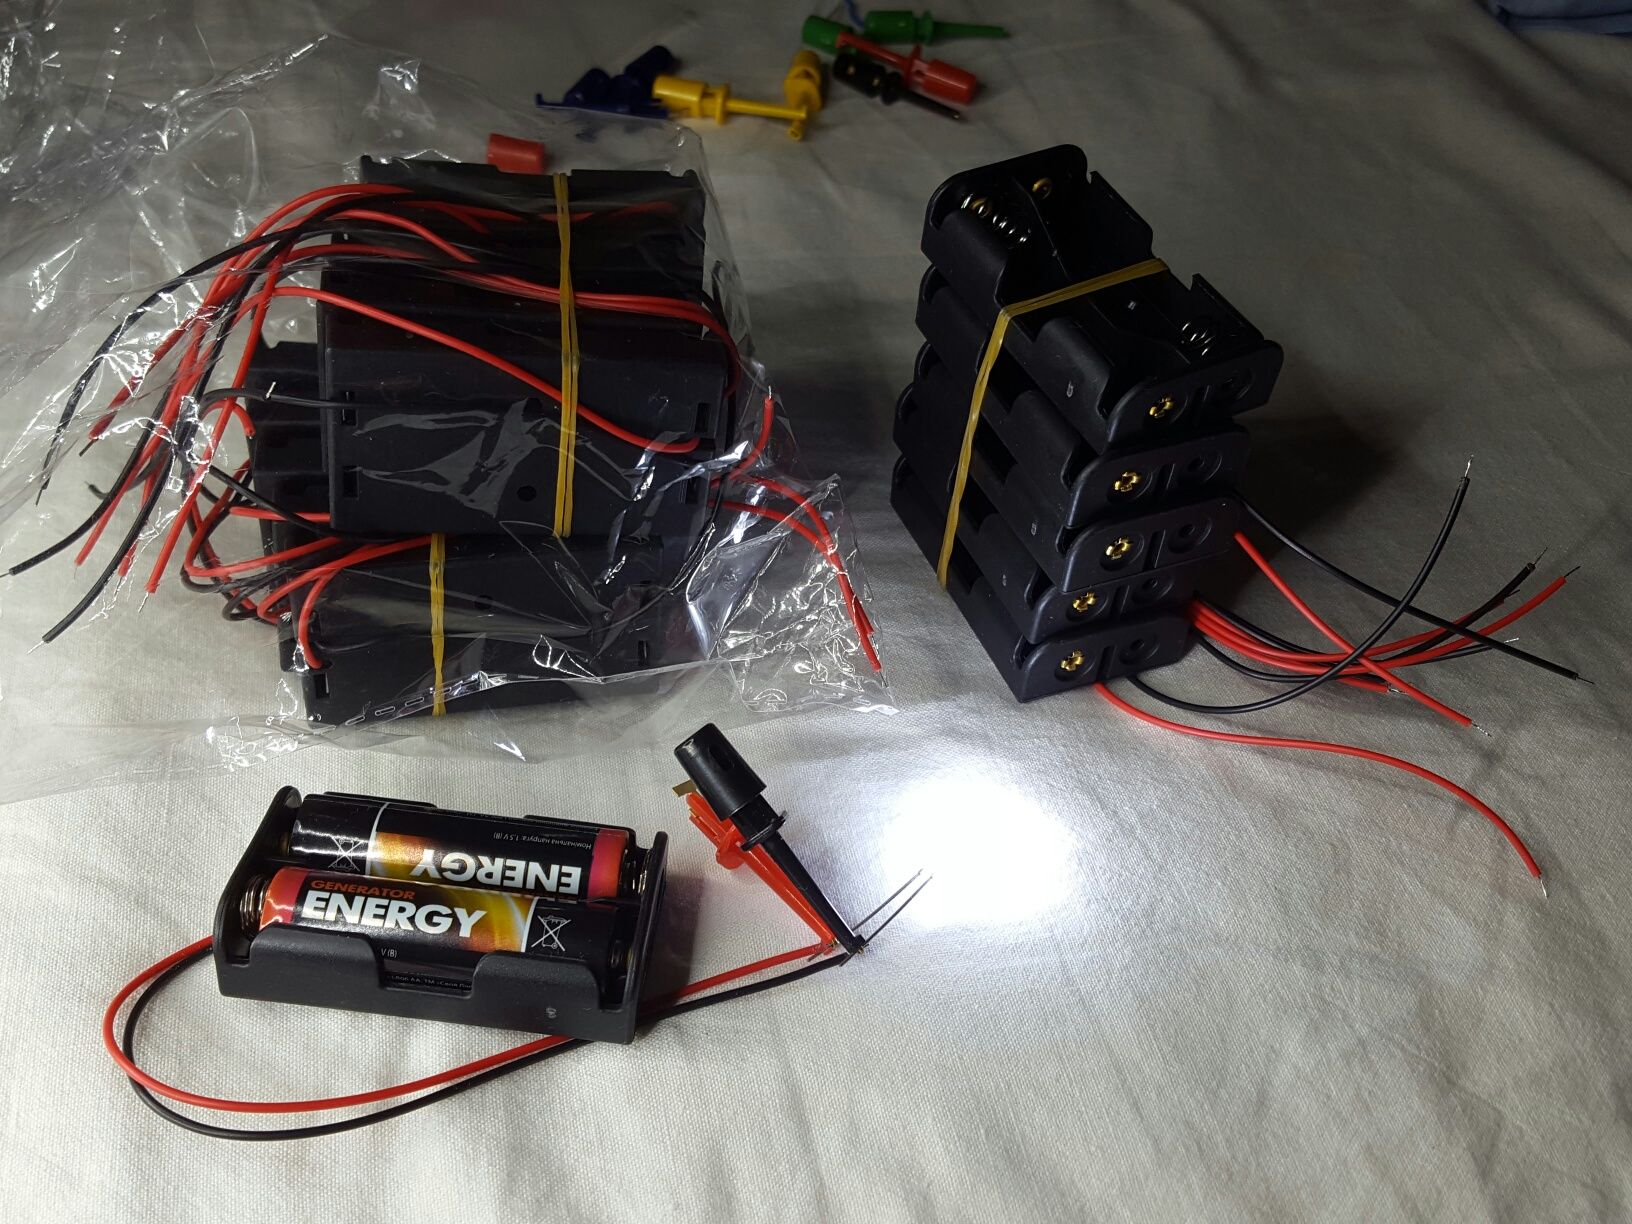 Холдеры, холдери, АА х2, 3В (1.5V x2), для батареек, светодиод, свечка